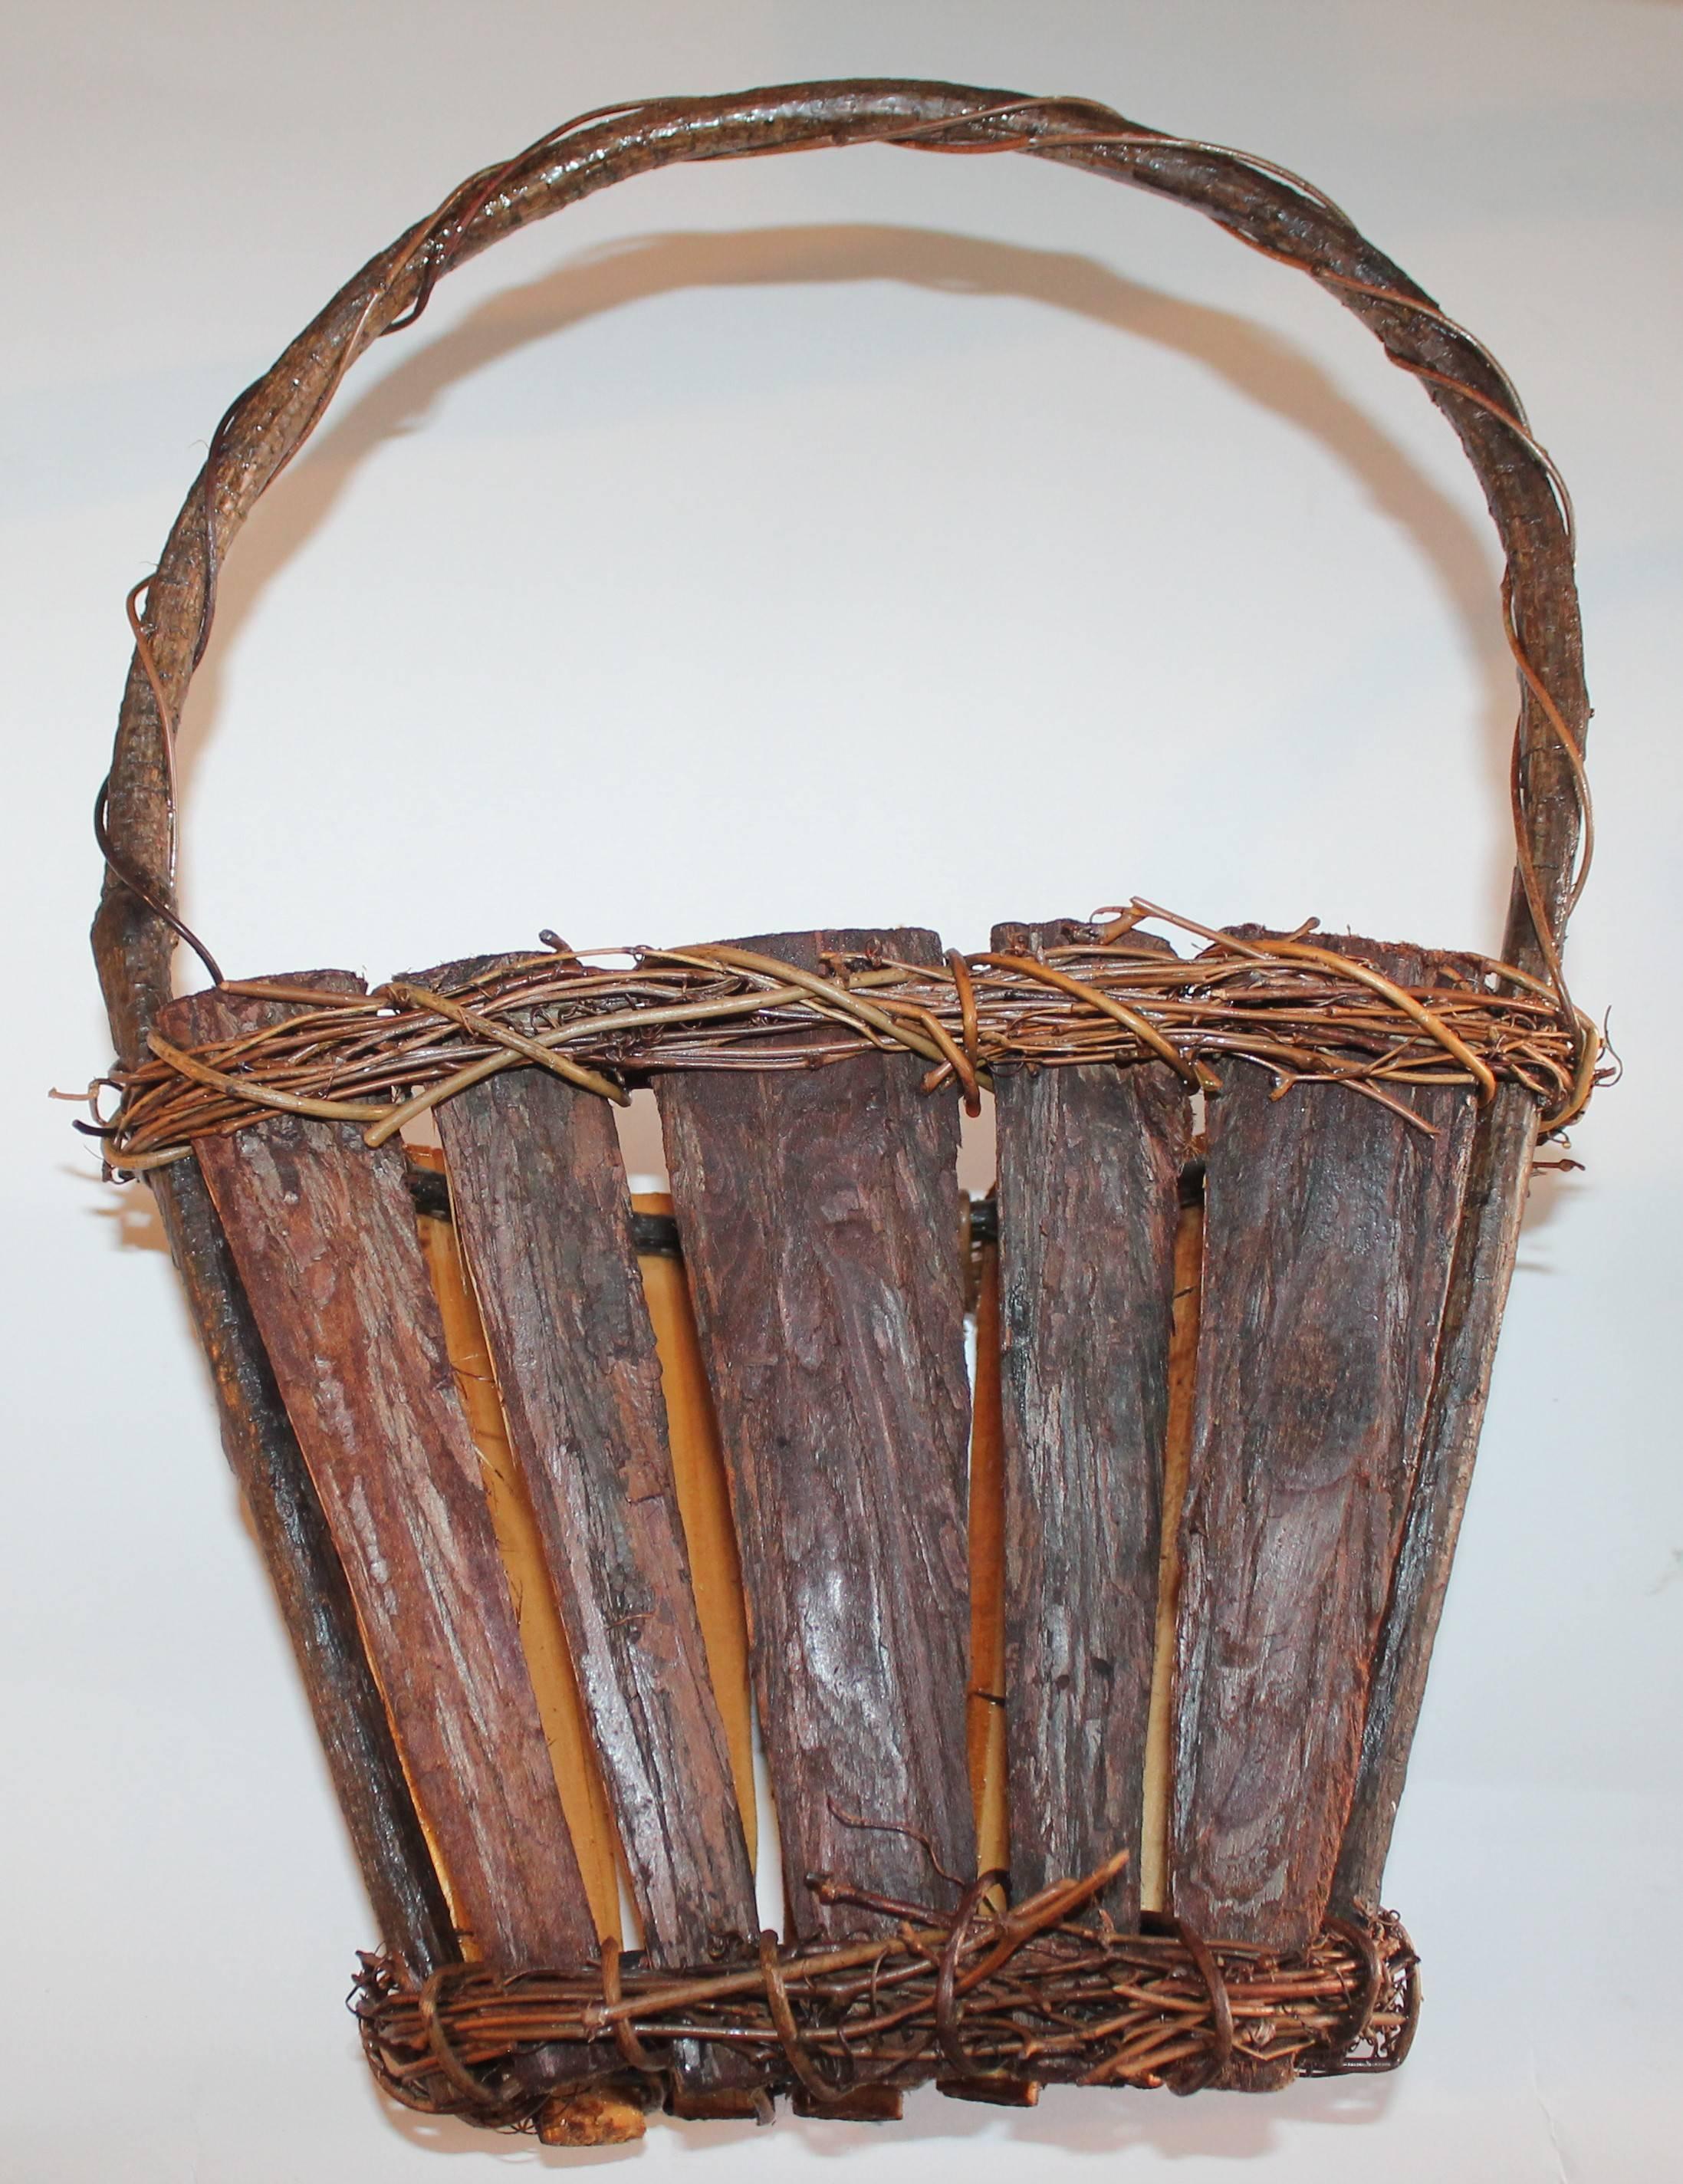 Hand-Crafted Adirondack Wall Baskets, Pair